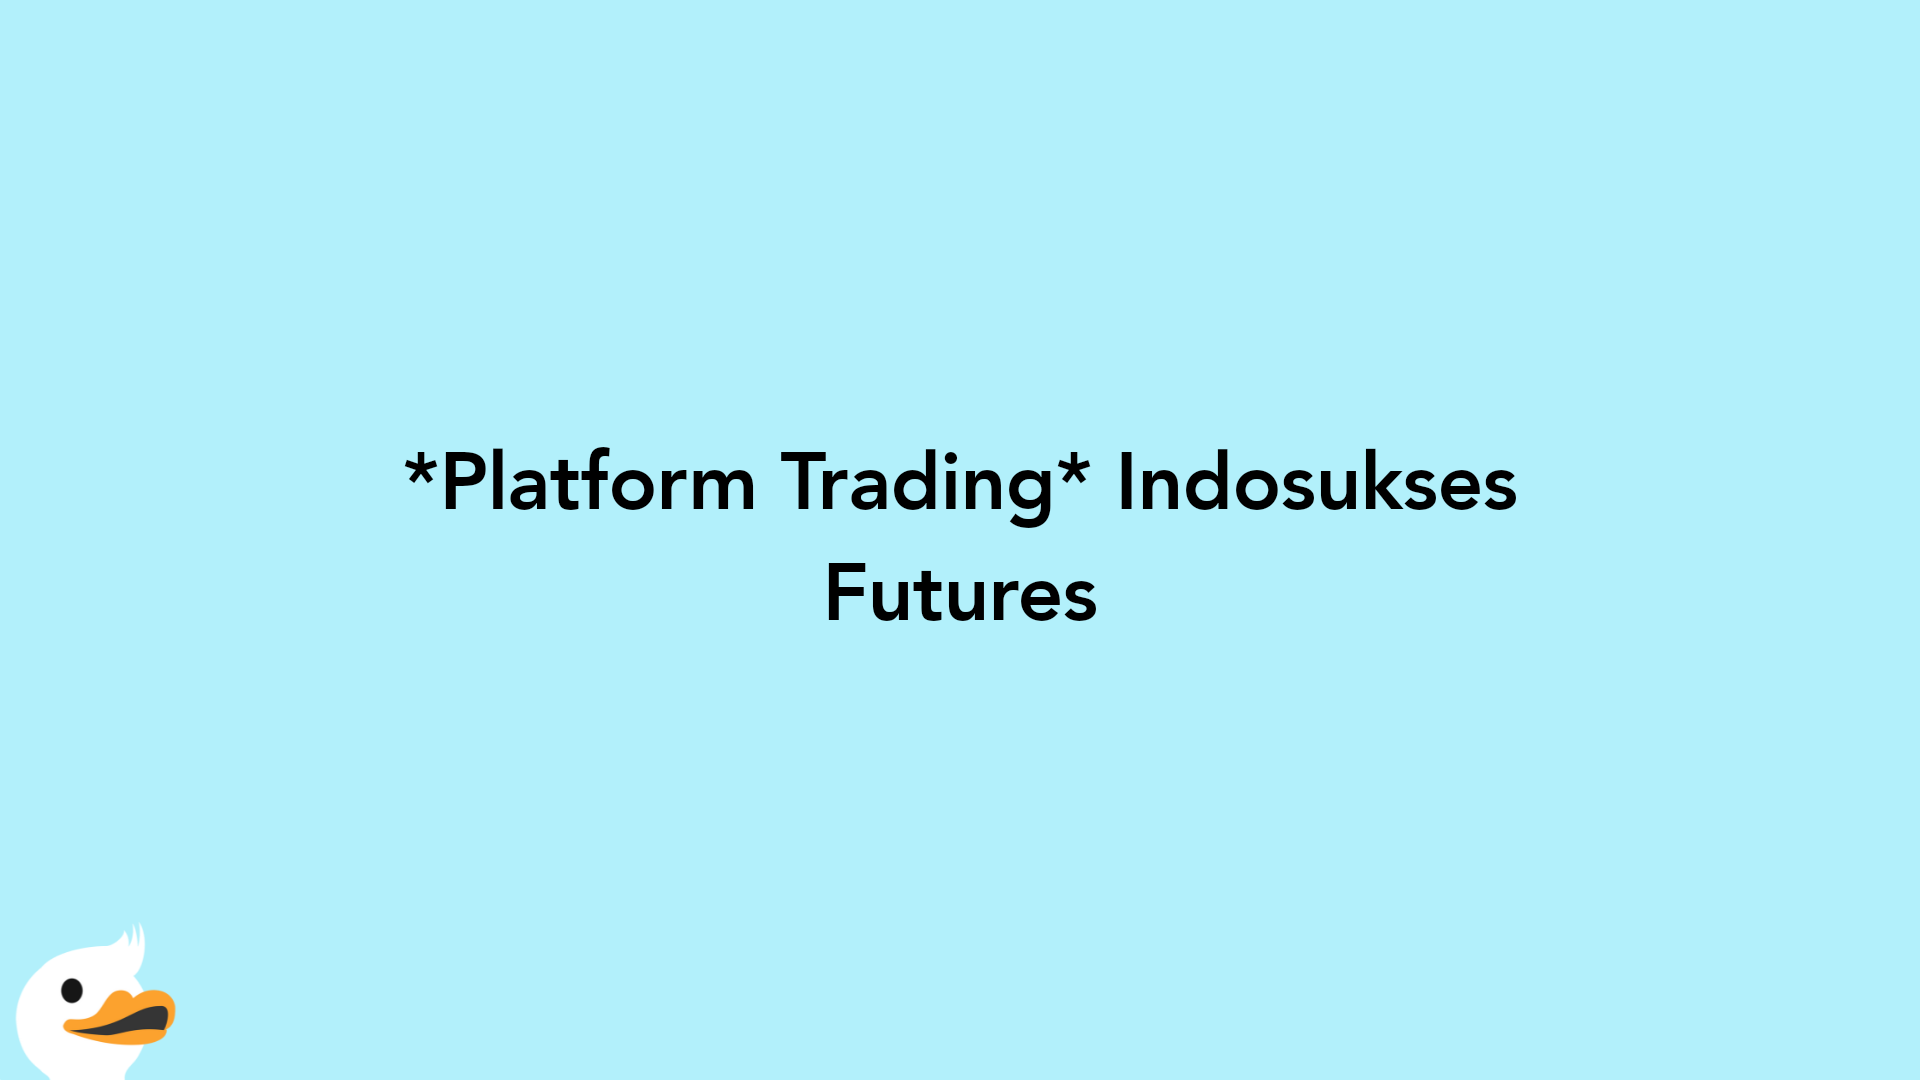 Platform Trading Indosukses Futures